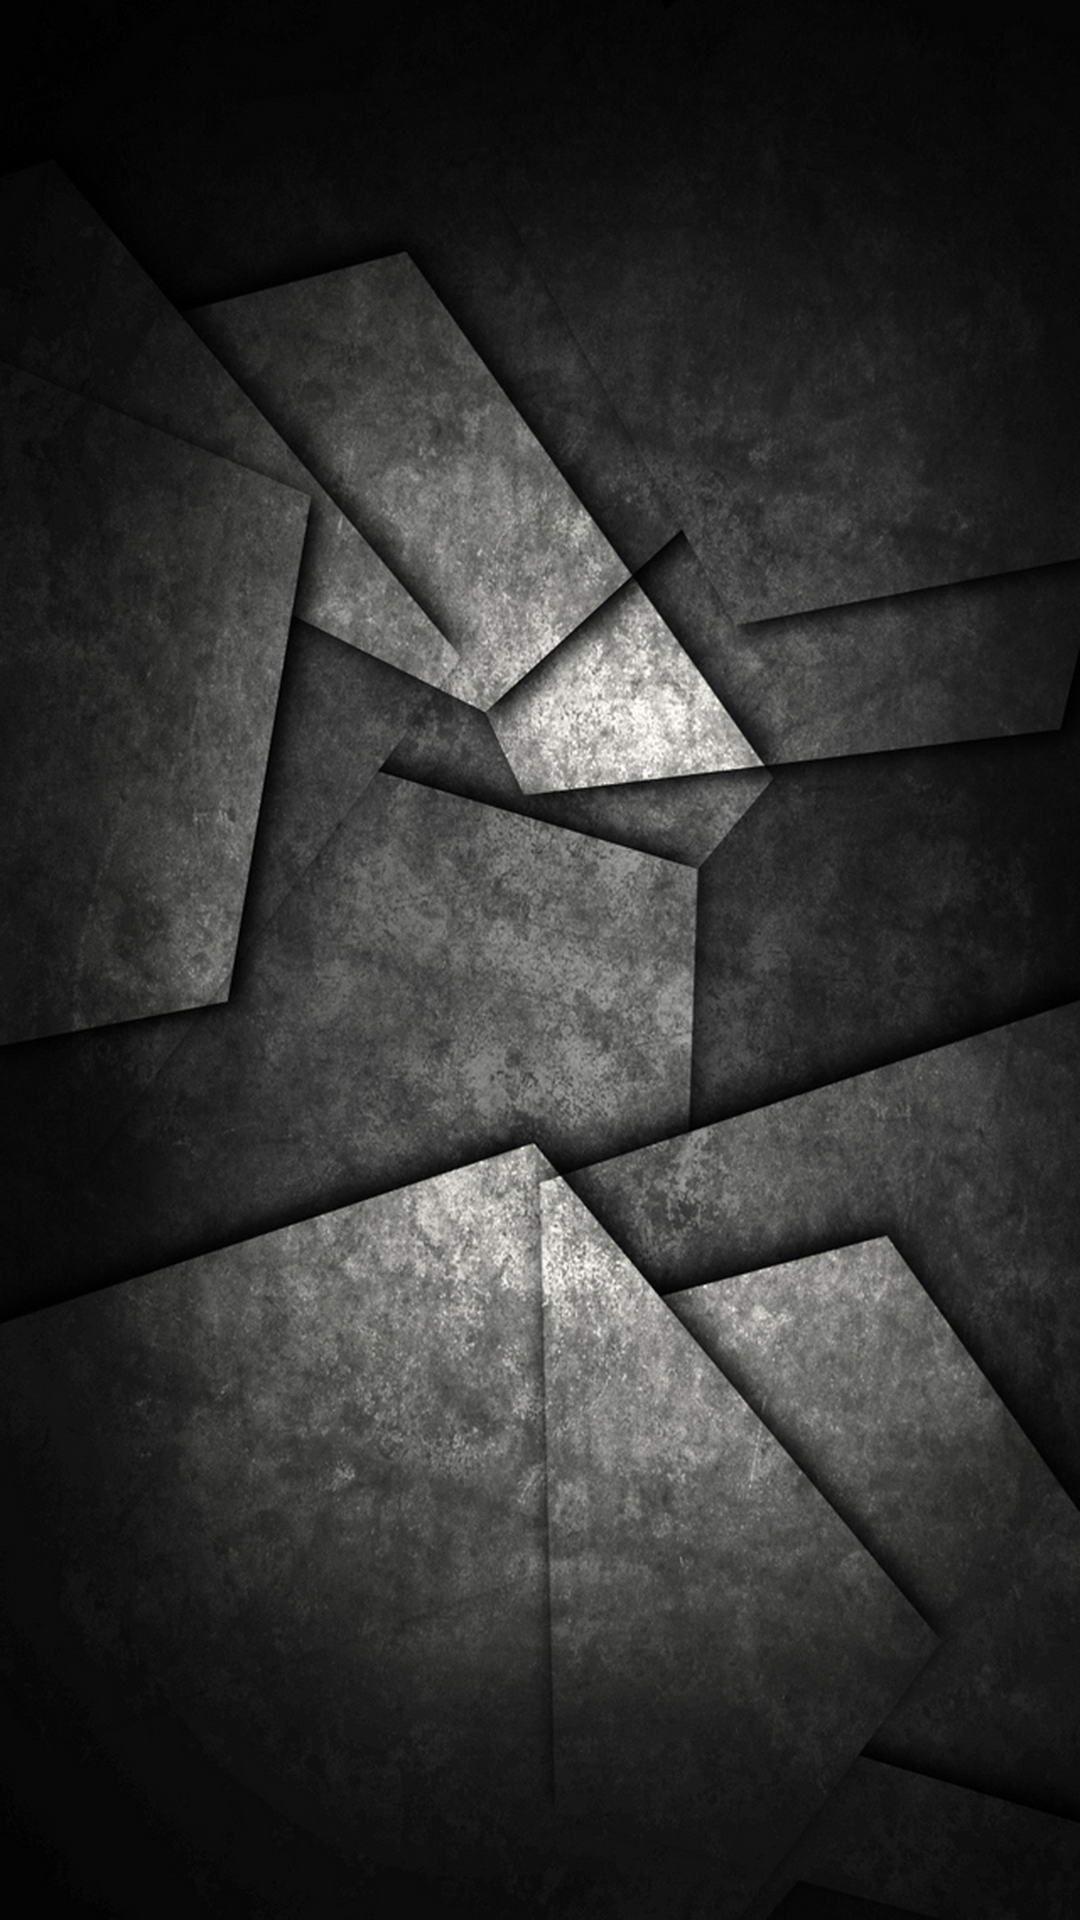 iPhone wallpaper black and white mosaic art